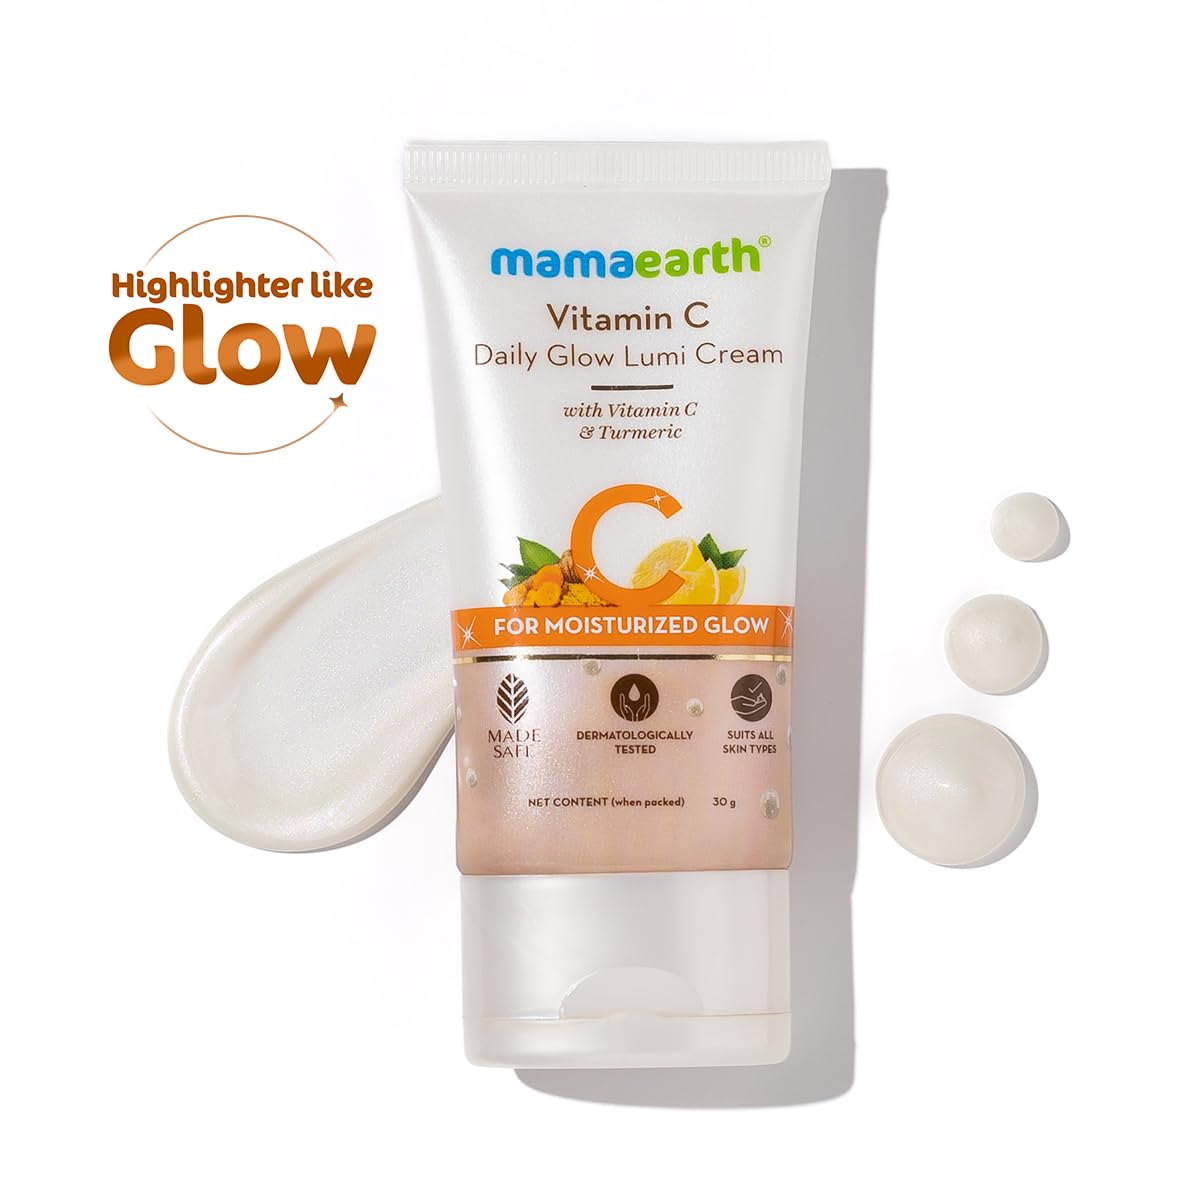 Mamaearth Vitamin C Daily Glow Lumi Cream with Vitamin C & Turmeric - 30 g